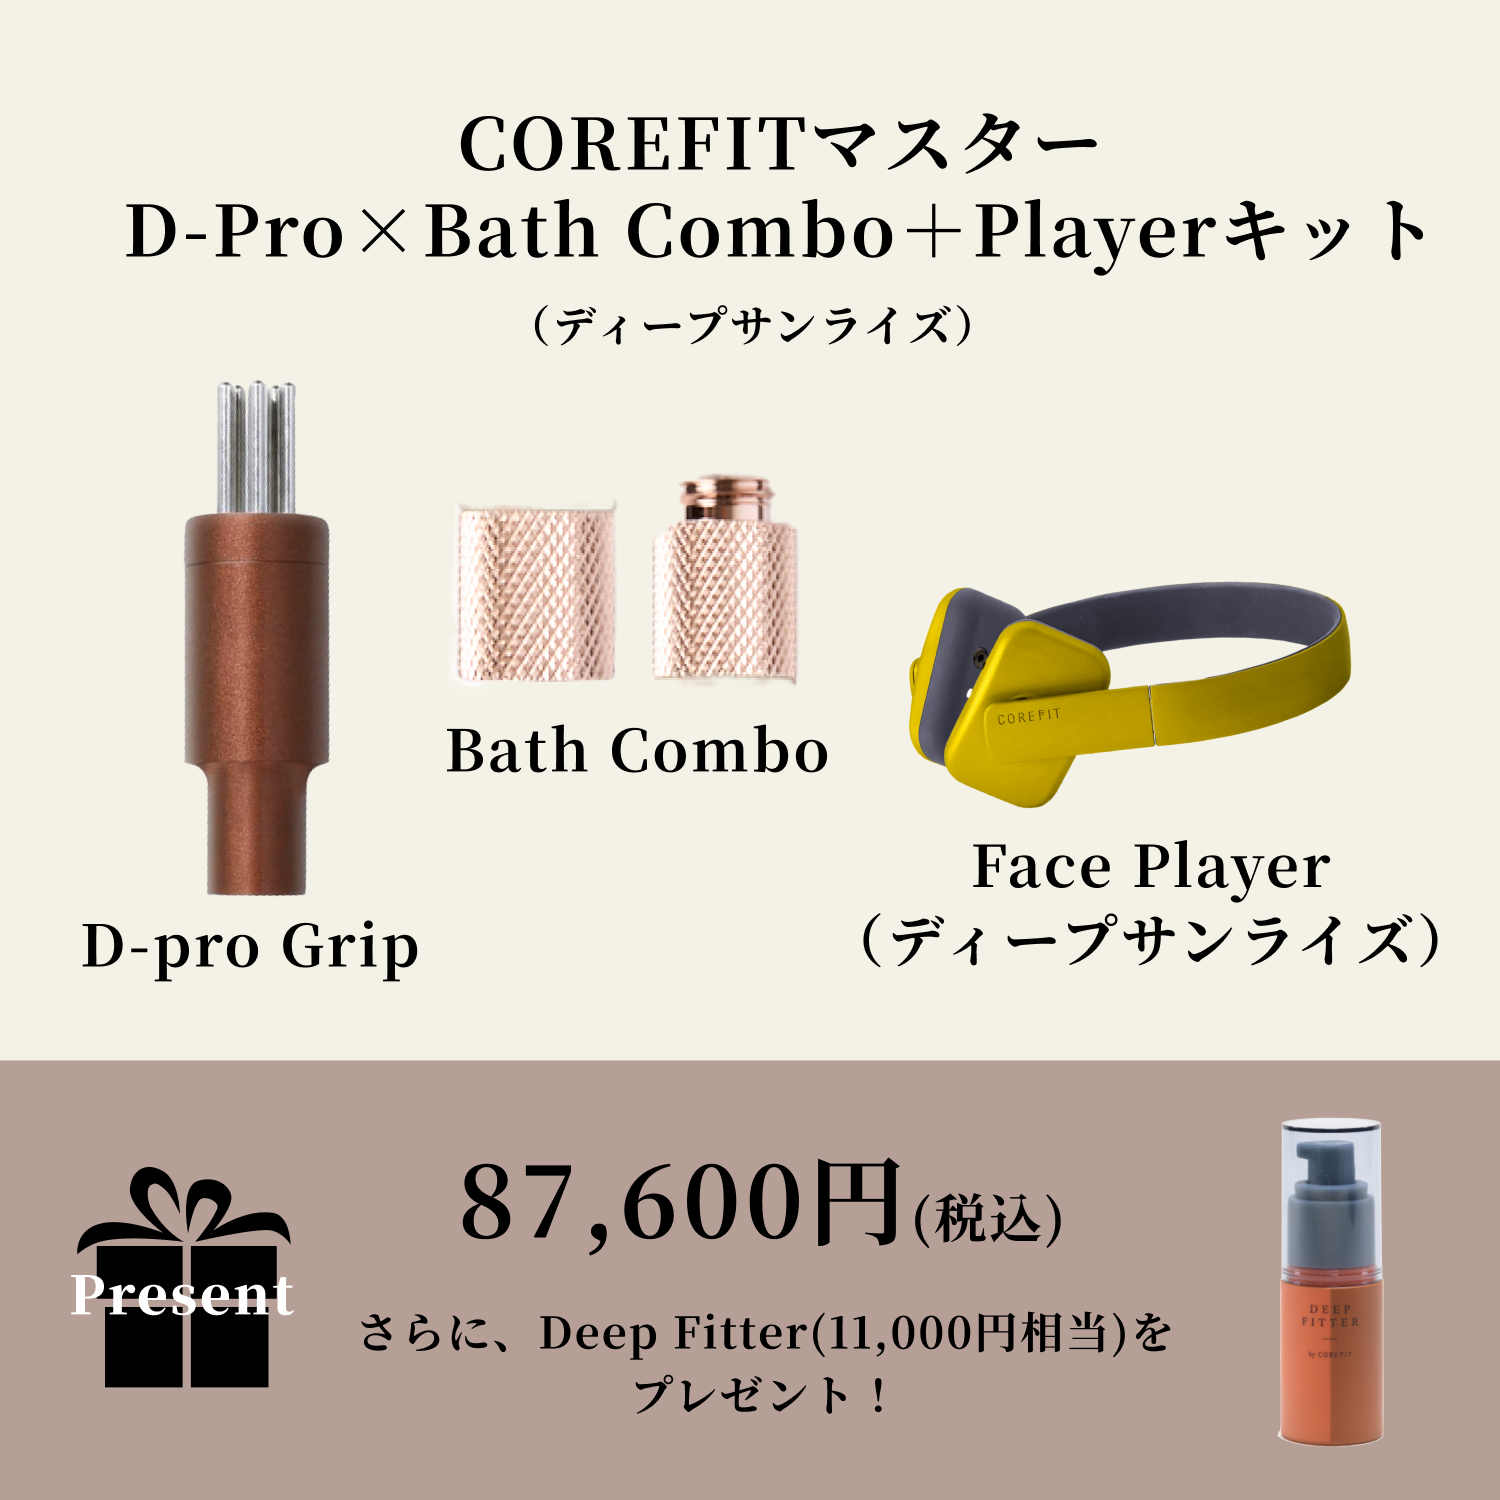 COREFIT | B-by-C／COREFITオンラインストア